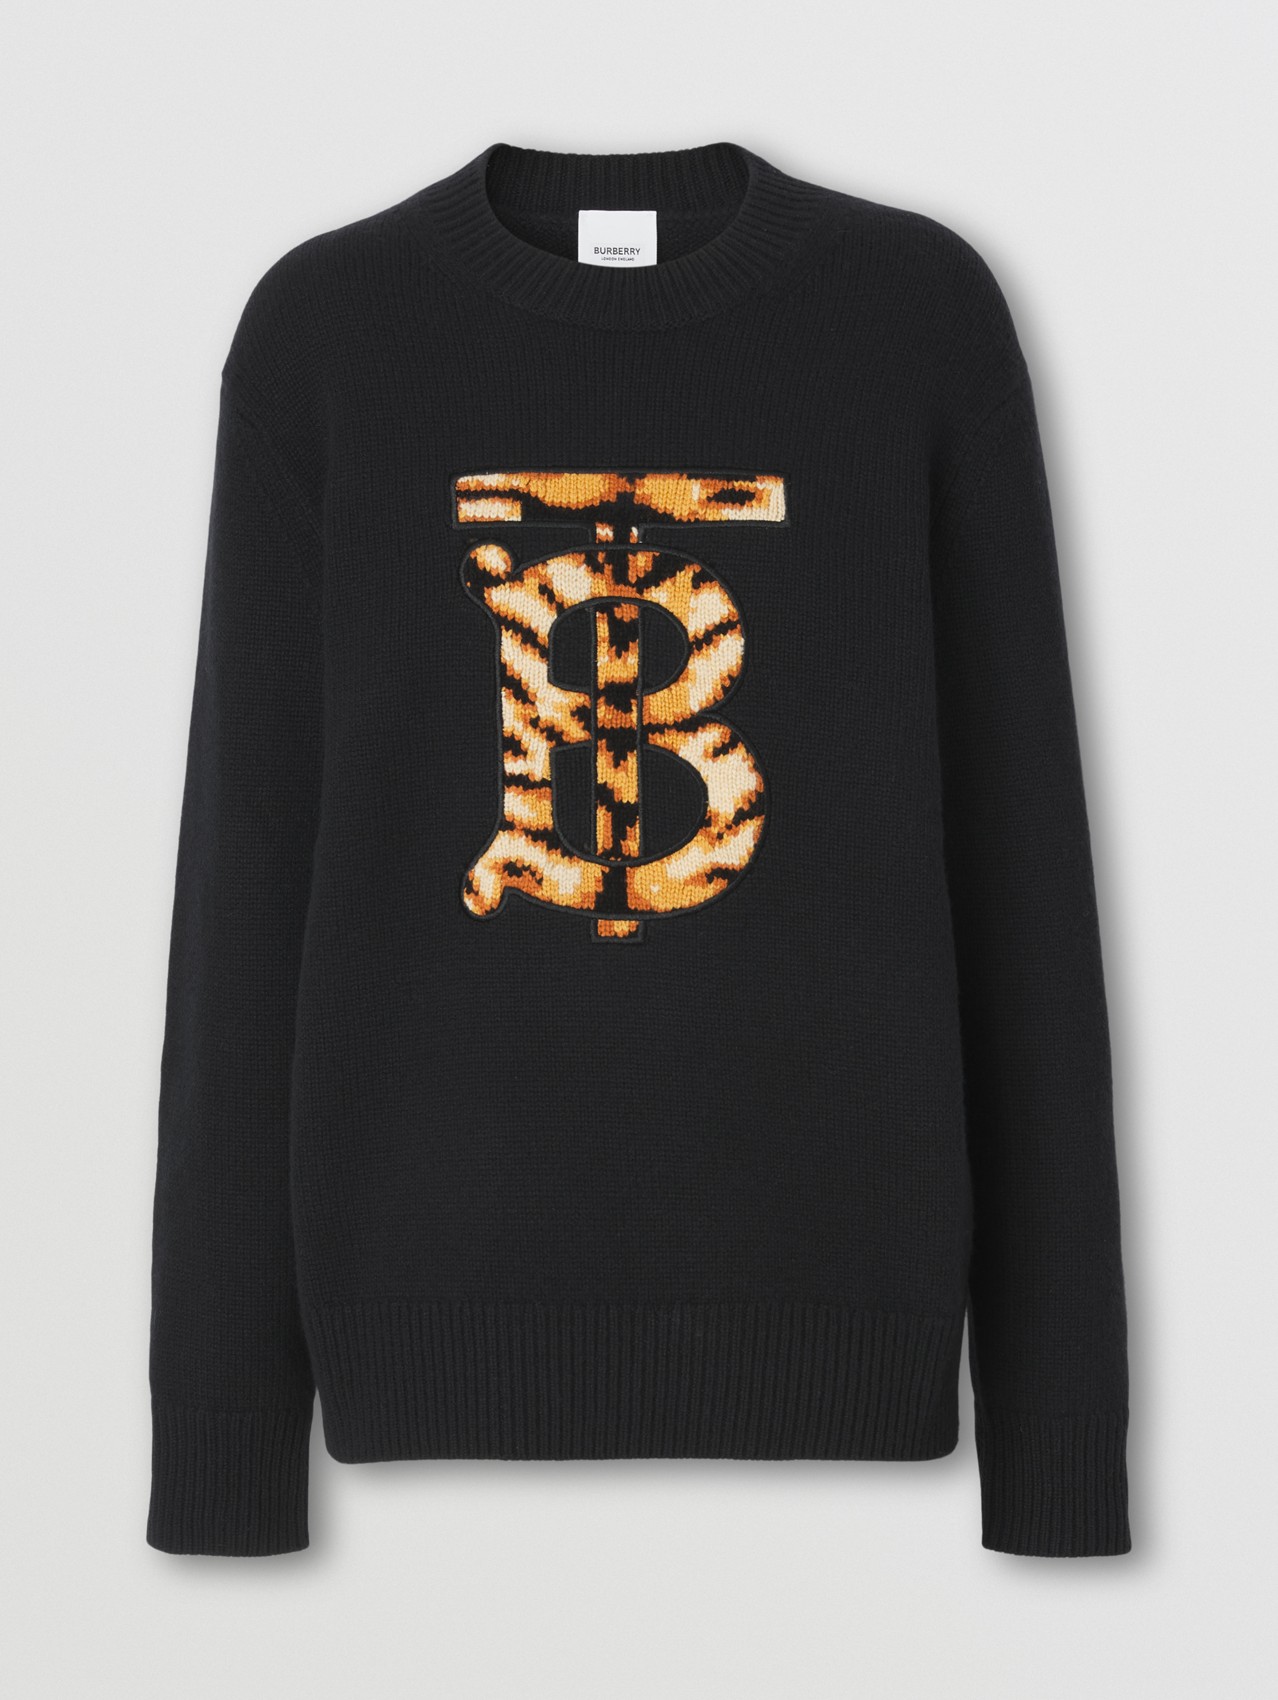 Monogram Motif Cashmere Sweater in Black